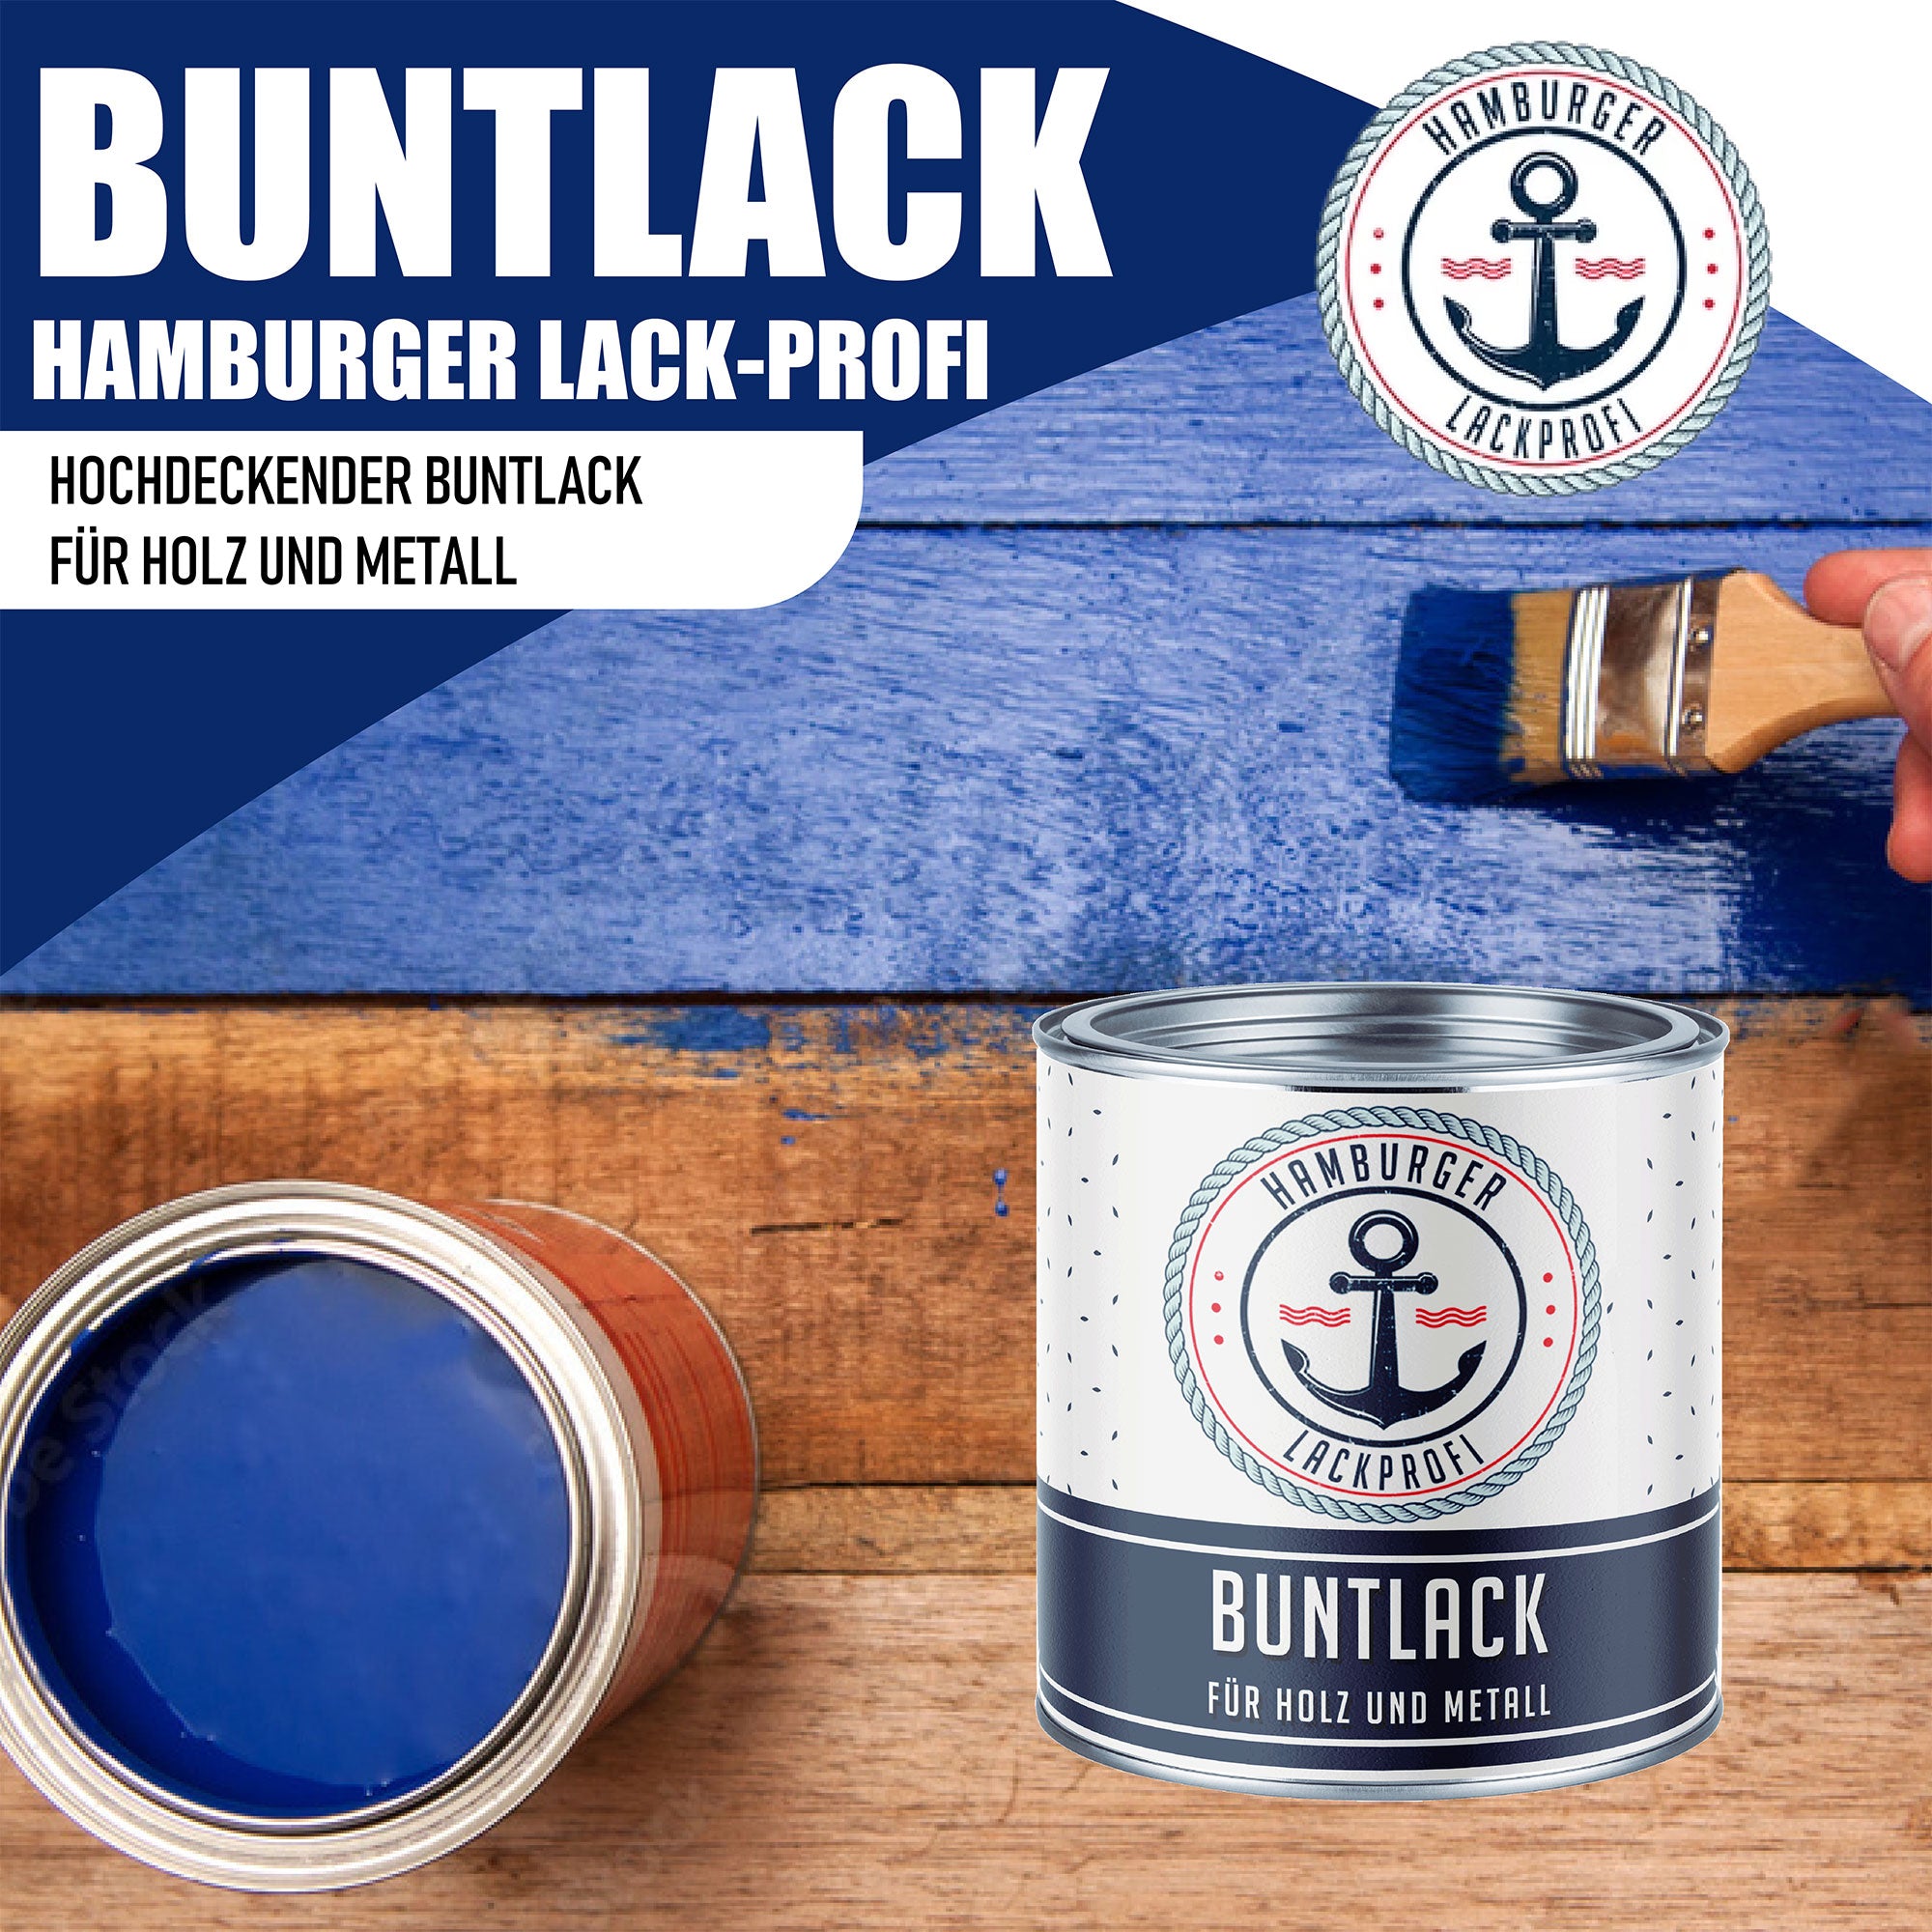 Hamburger Lack-Profi Buntlack Braunrot RAL 3011 - Robuster Kunstharzlack